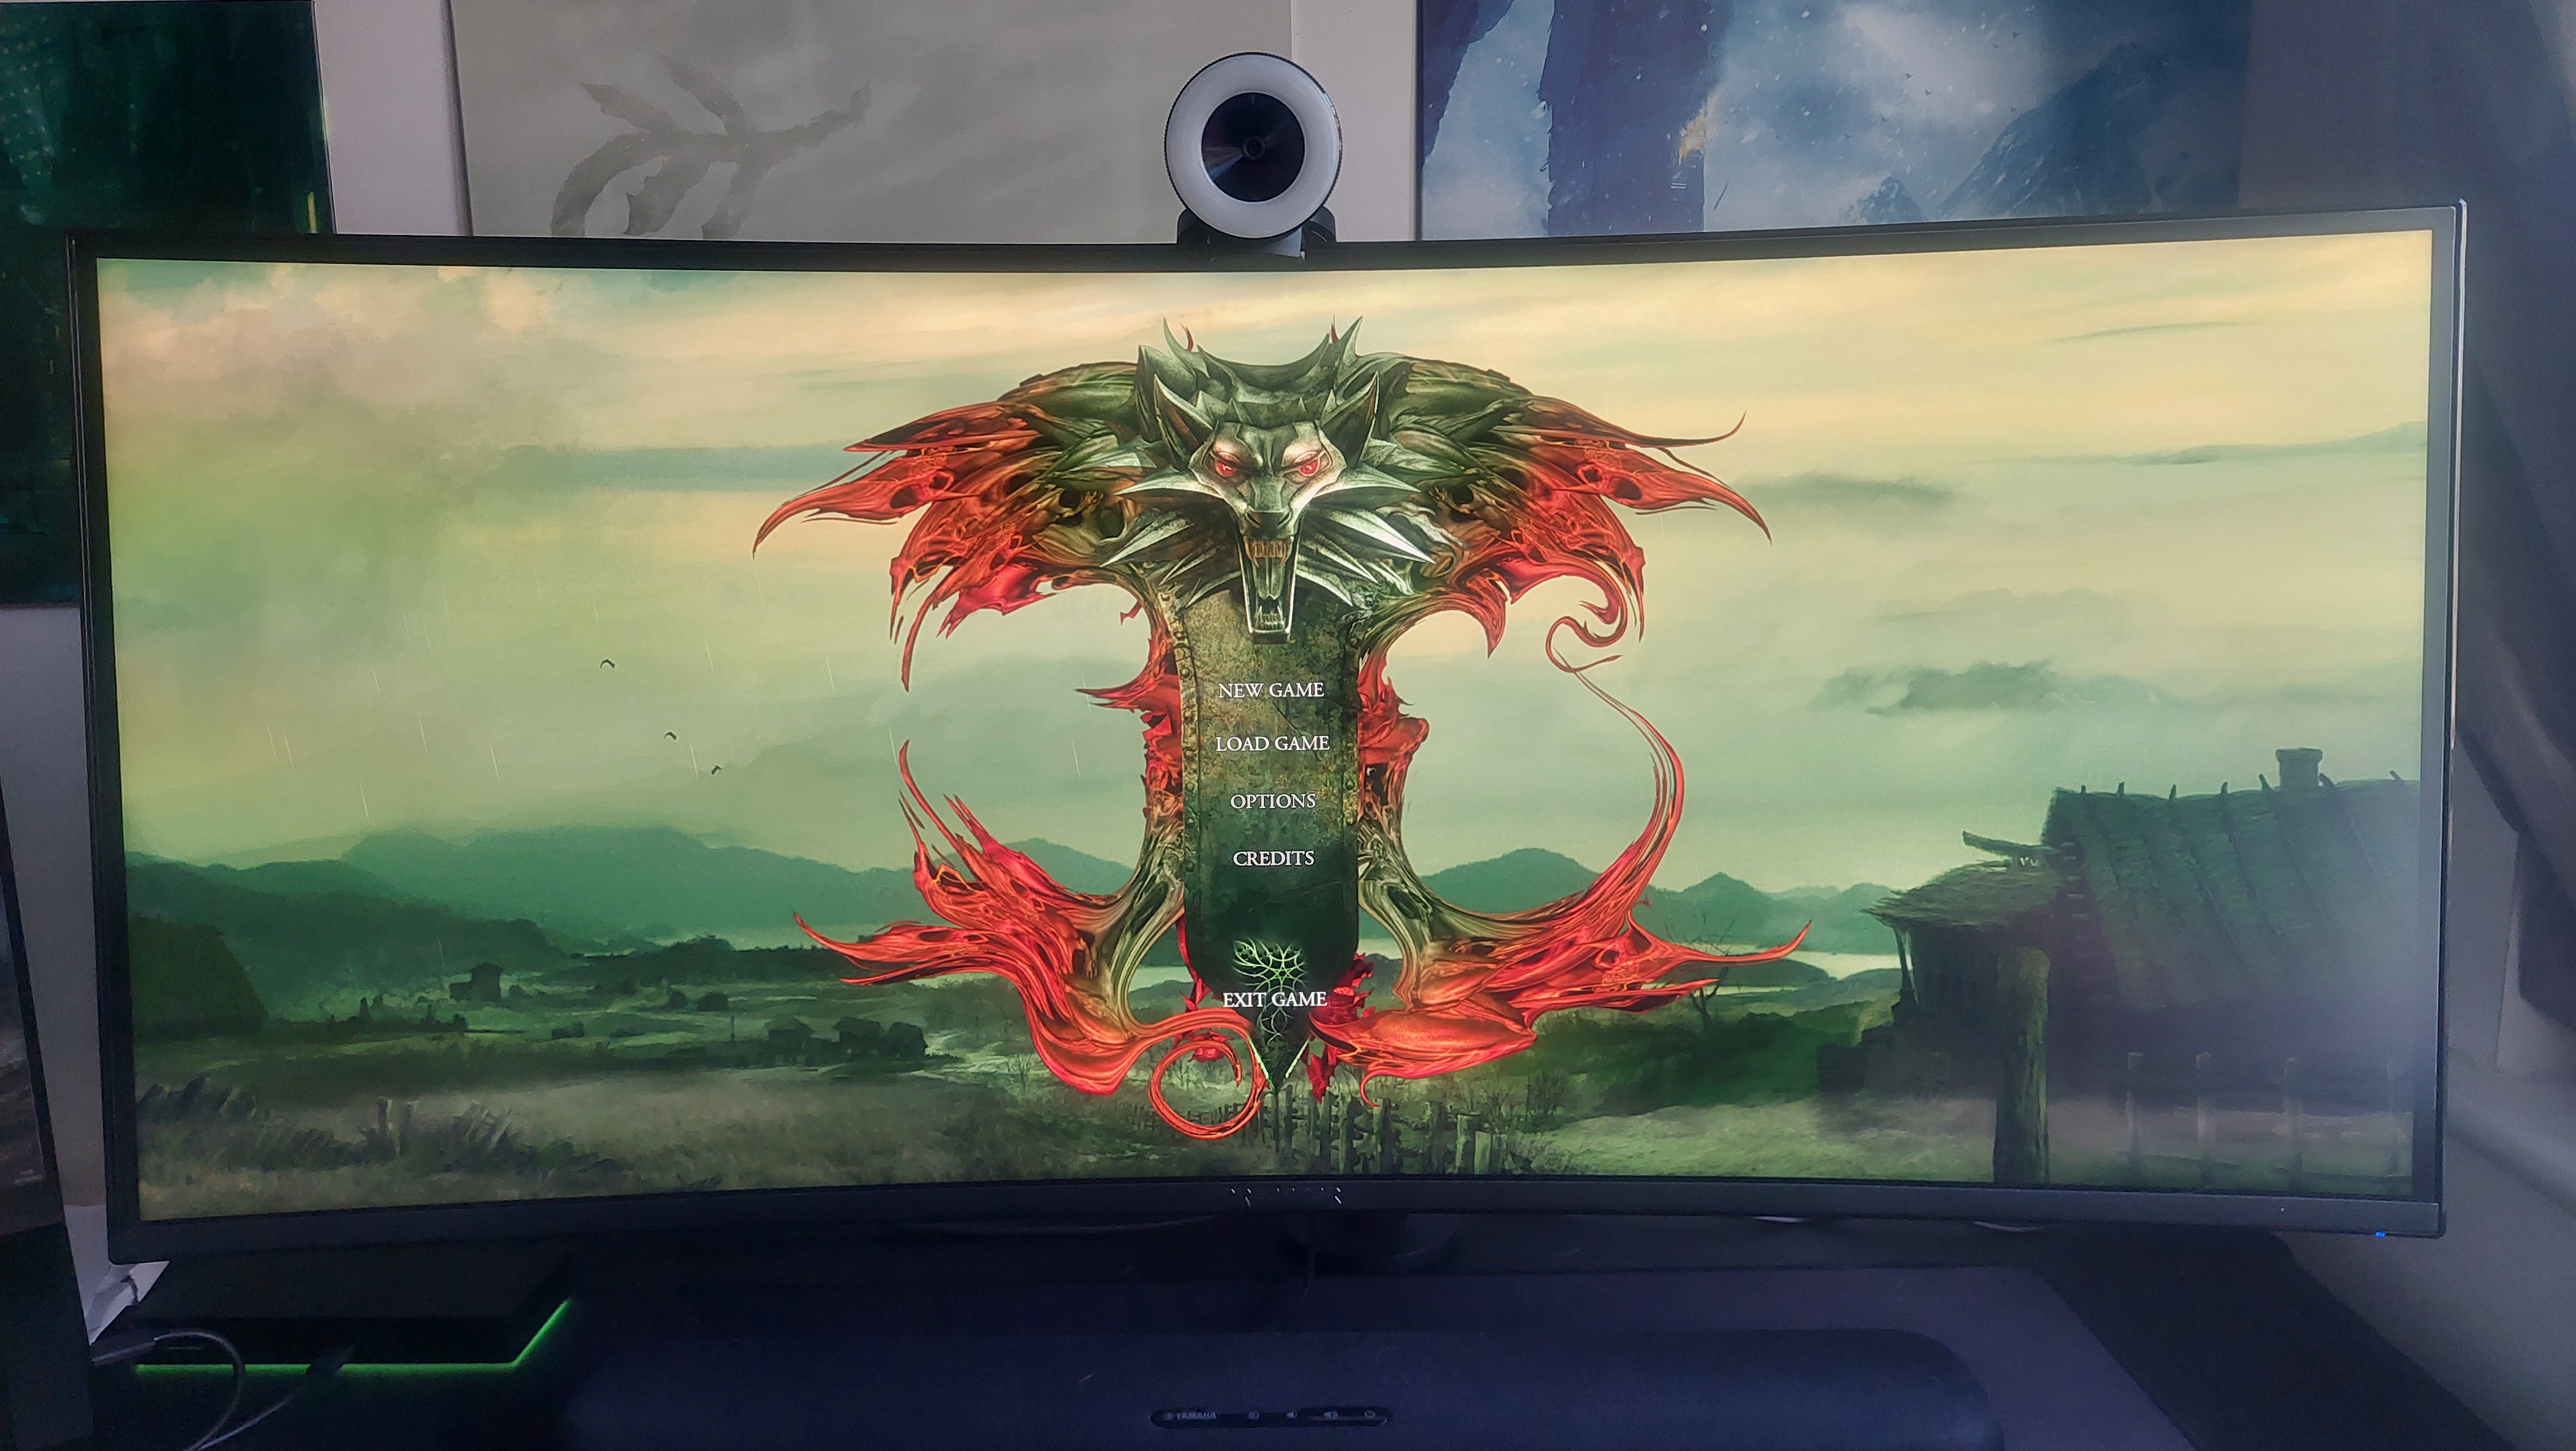 Acer Predator X38 gaming monitor